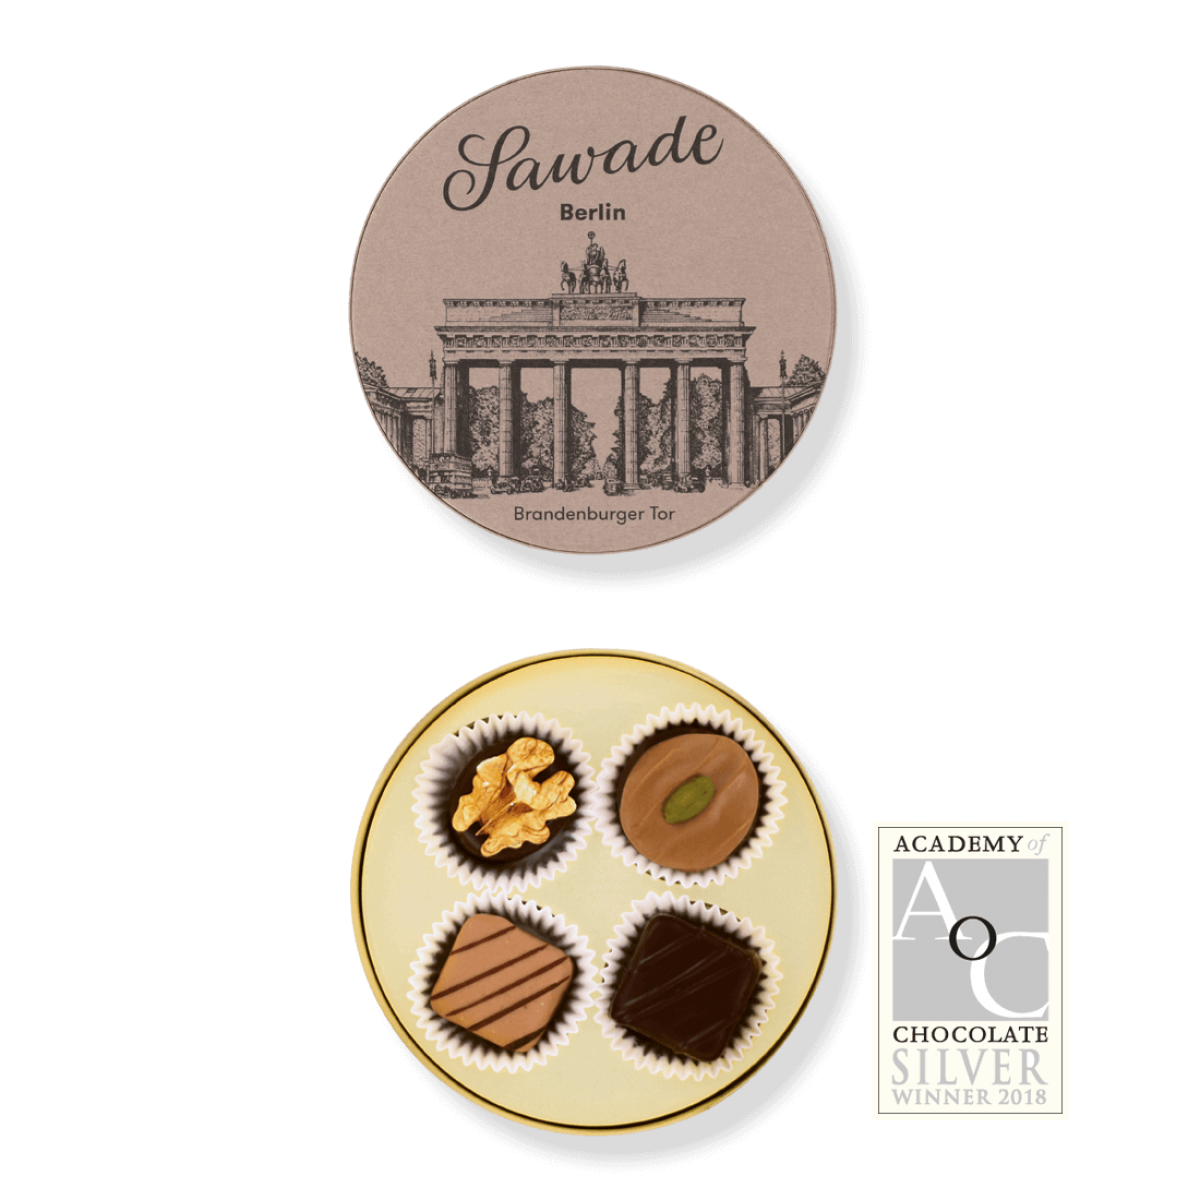 Sawade Small round box of chocolates Brandenburg Gate Alcohol-free